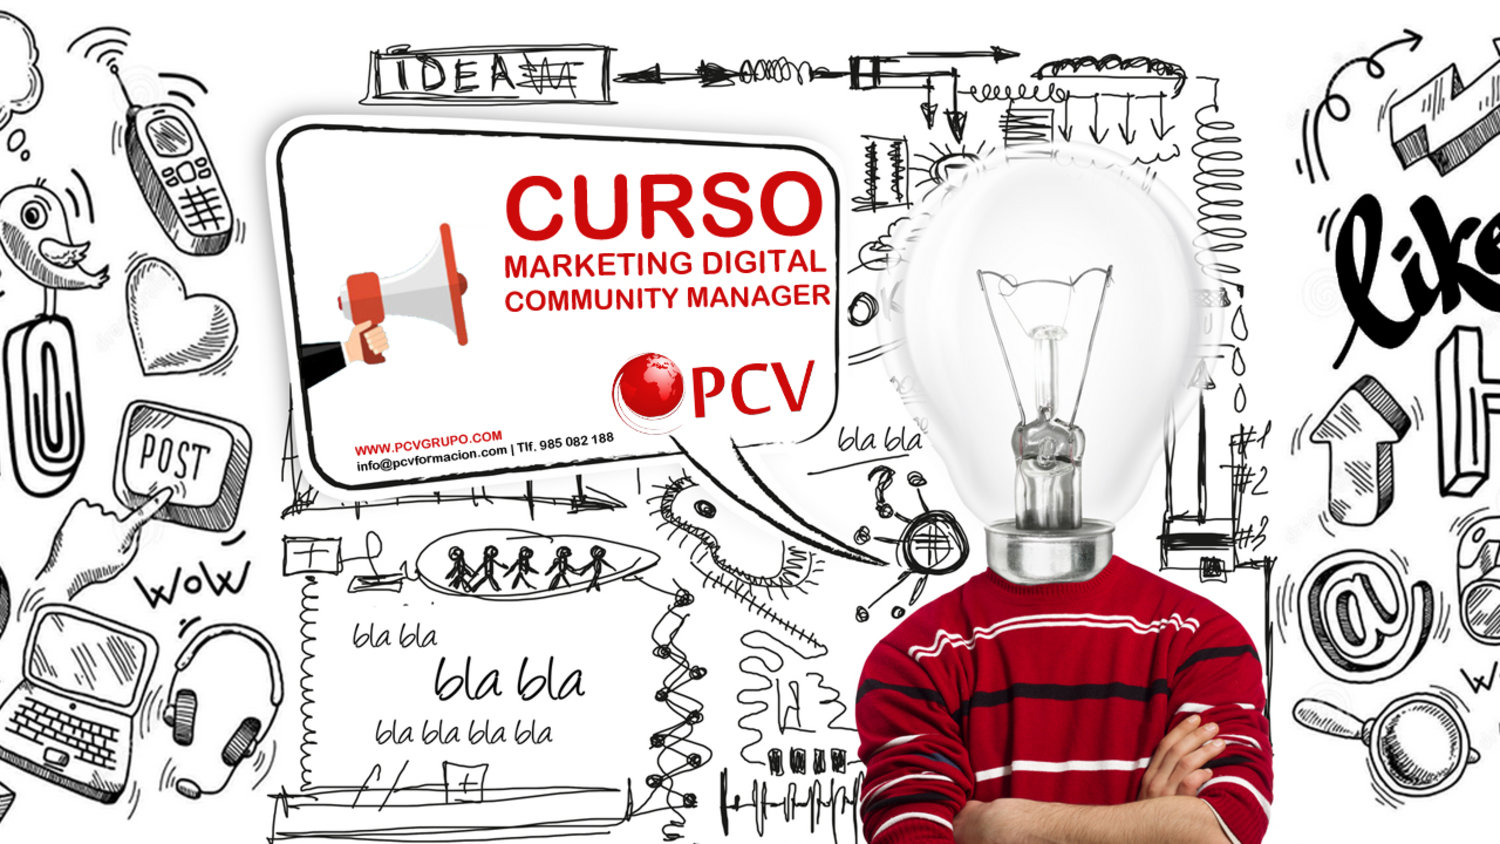 Curso-Marketing-Digital-Community-Manager